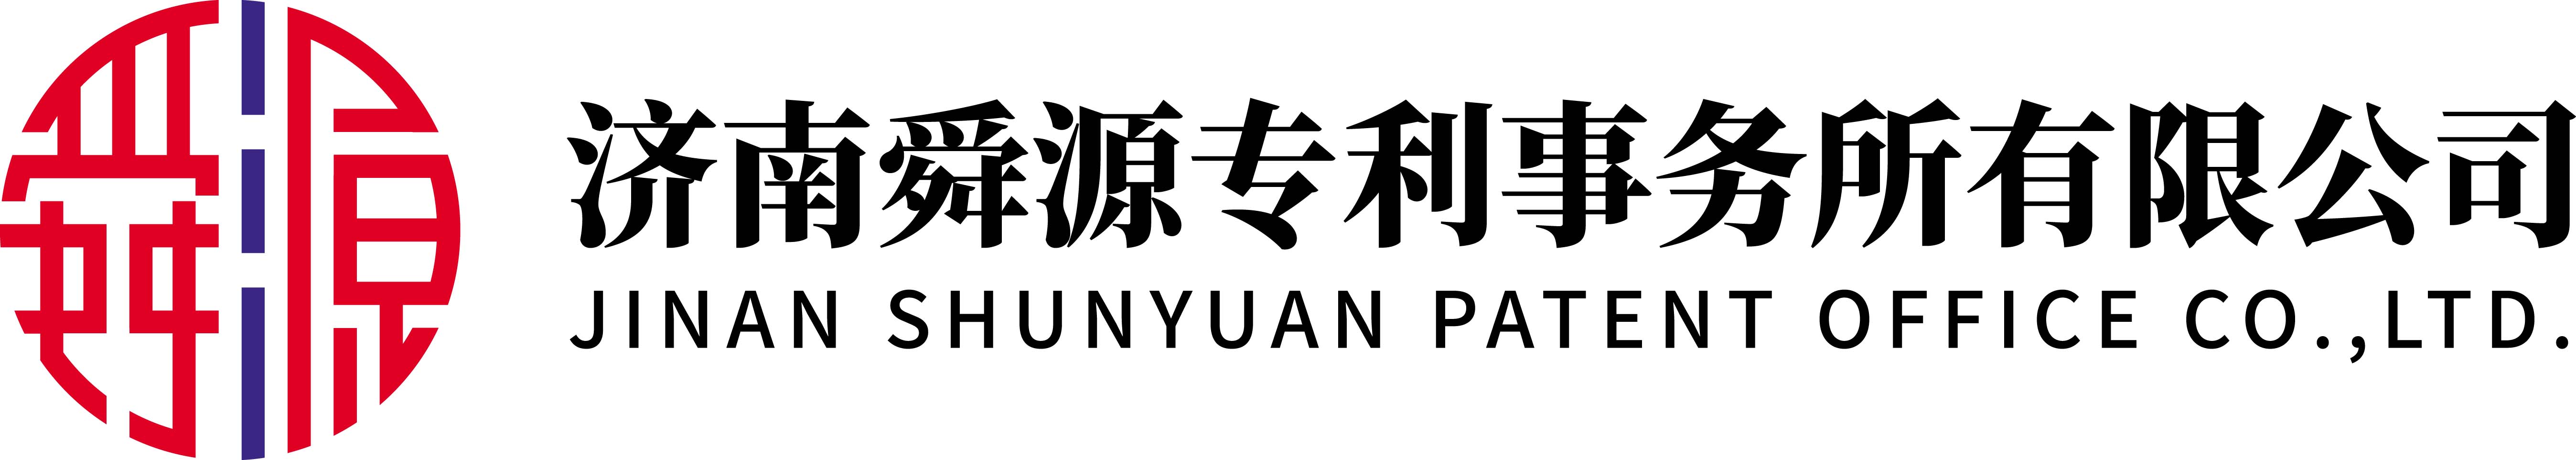 Jinan Shunyuan Patent Office Co. , Ltd.